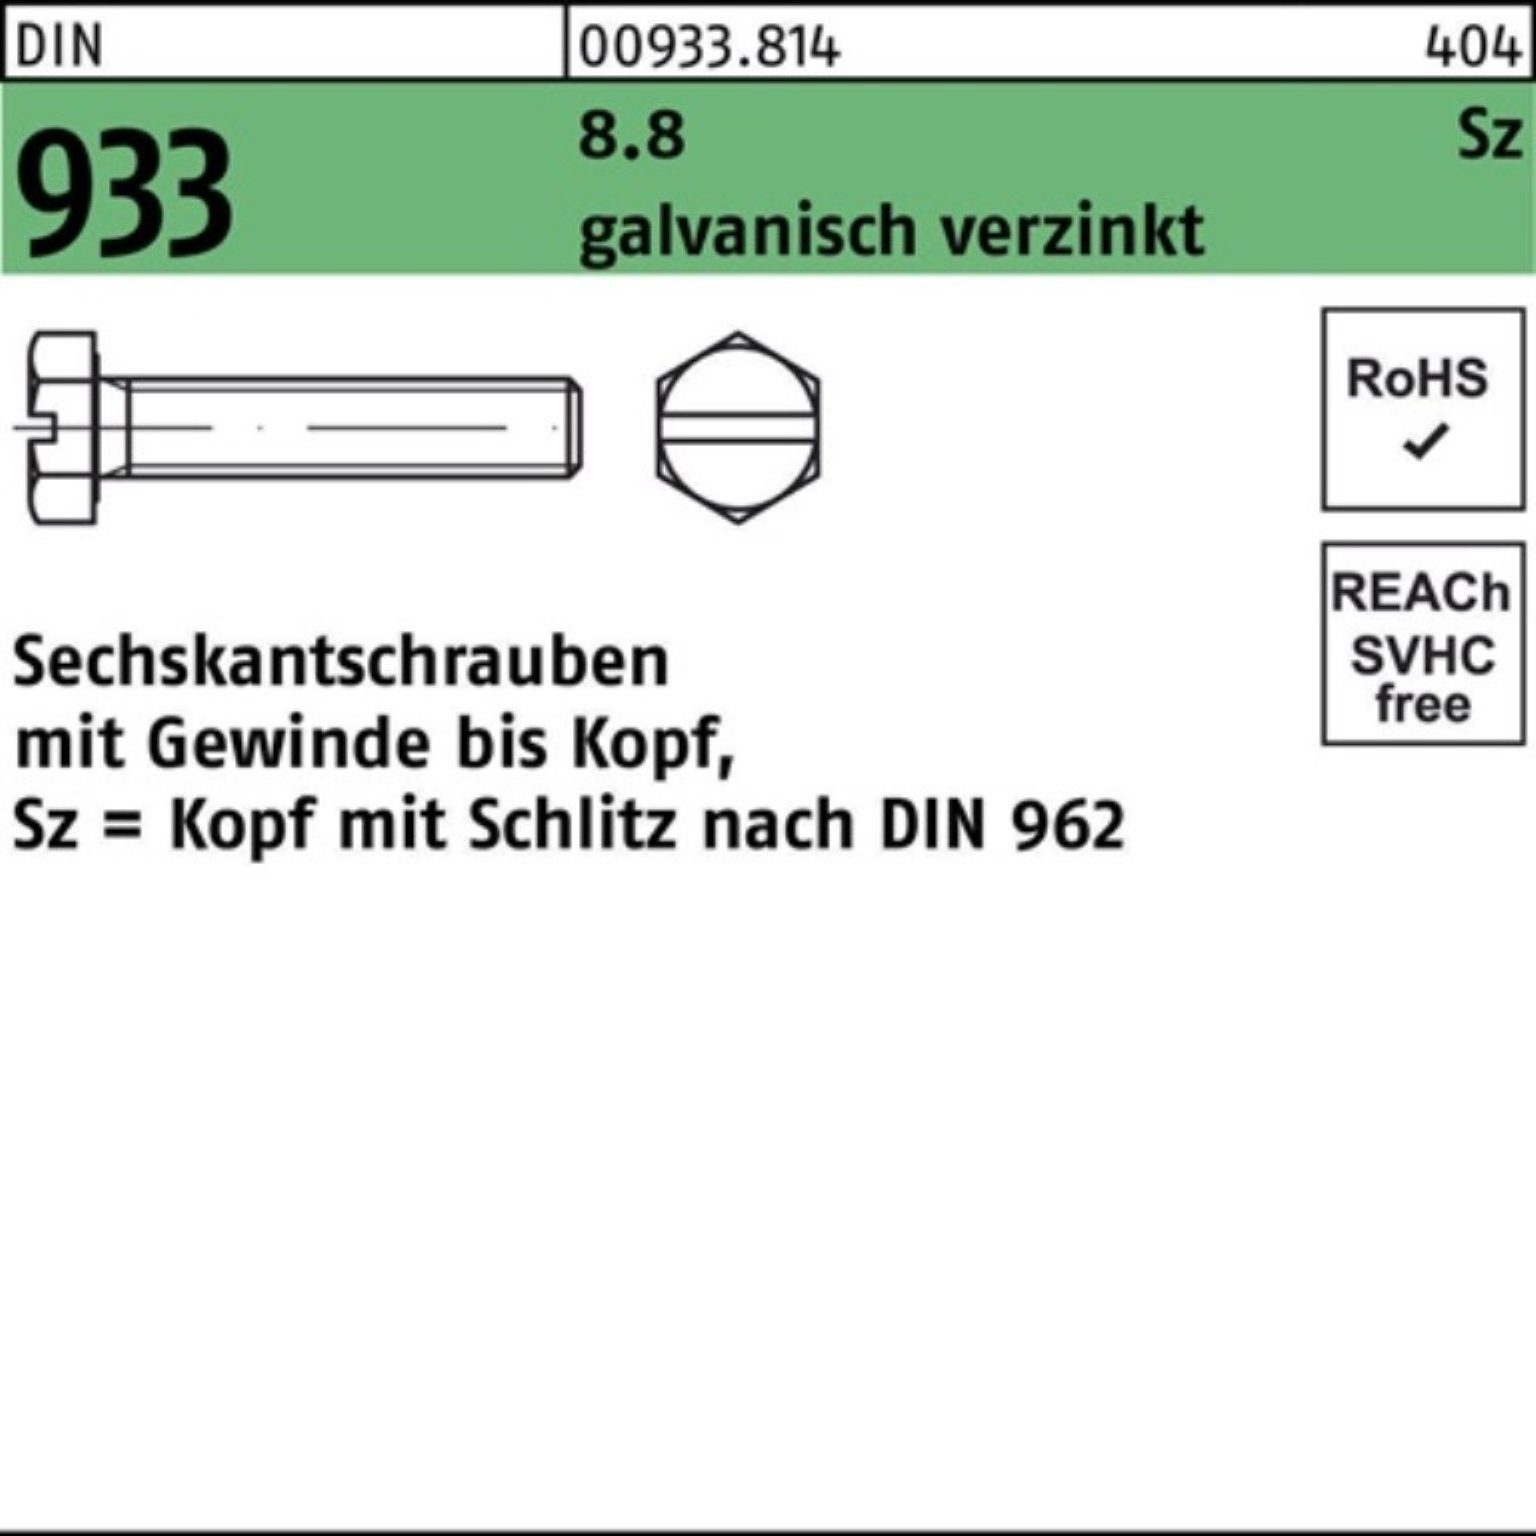 DIN M4x 8.8 Reyher galv.verz. Sechskantschraube VG/Schlitz Sechskantschraube 500er 933 Pack 10